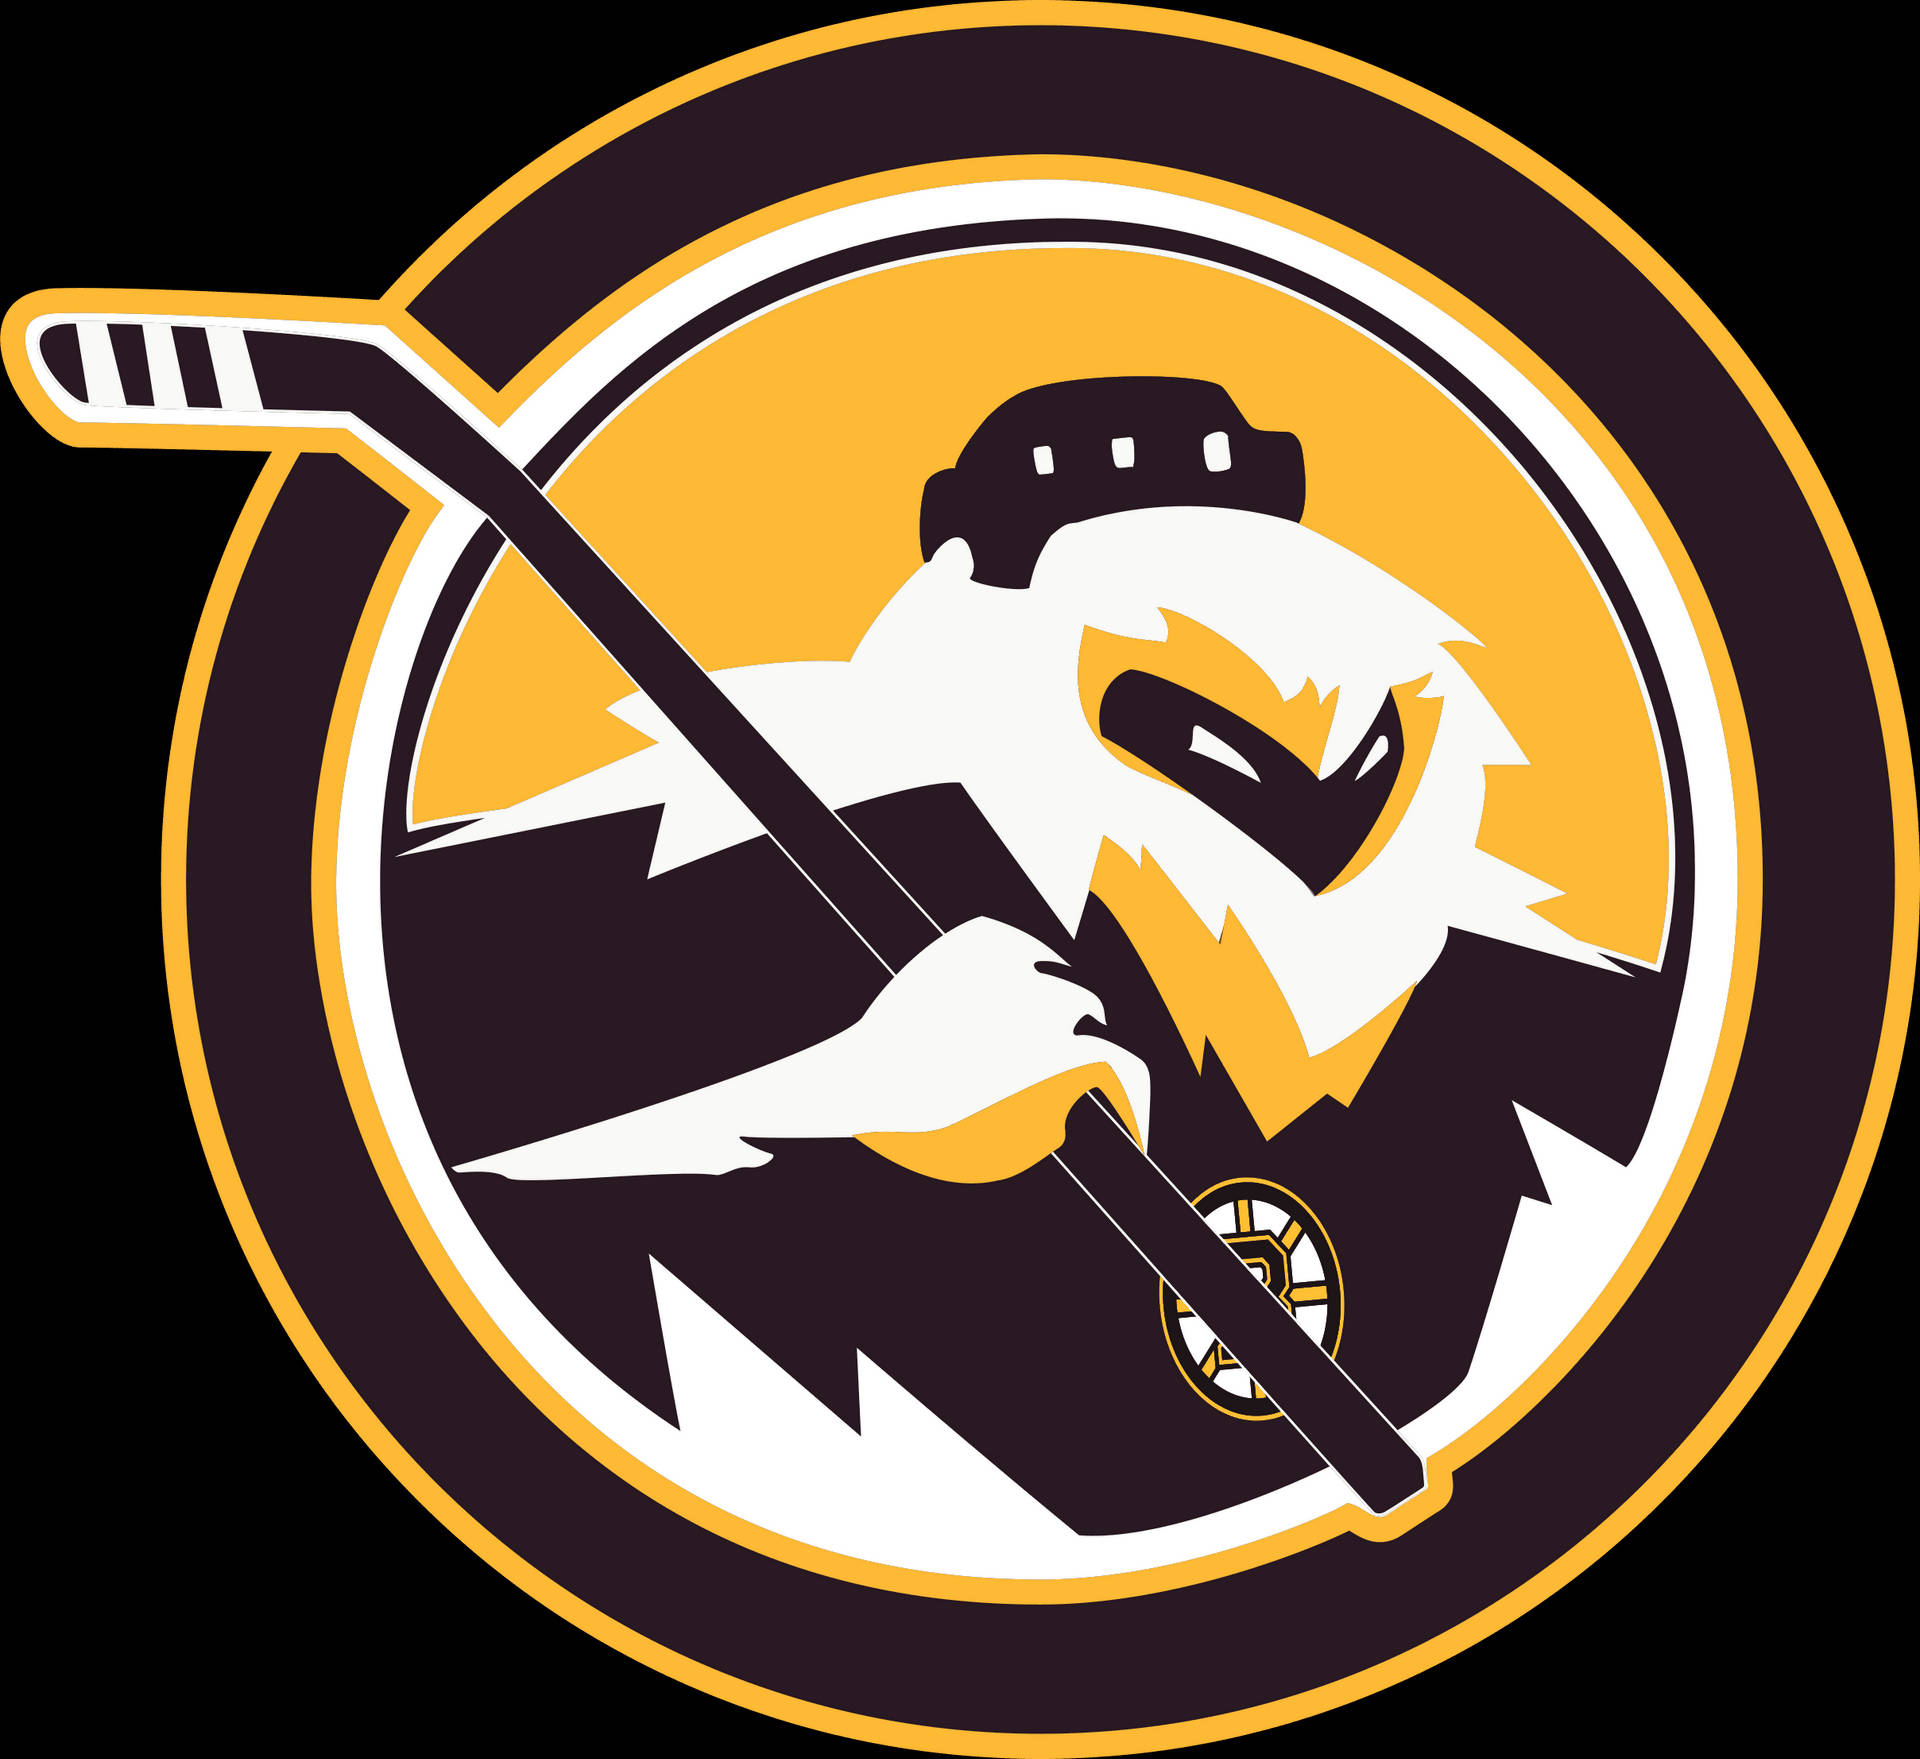 Logo Of The Boston Bruins Ice Hockey Team Wallpaper